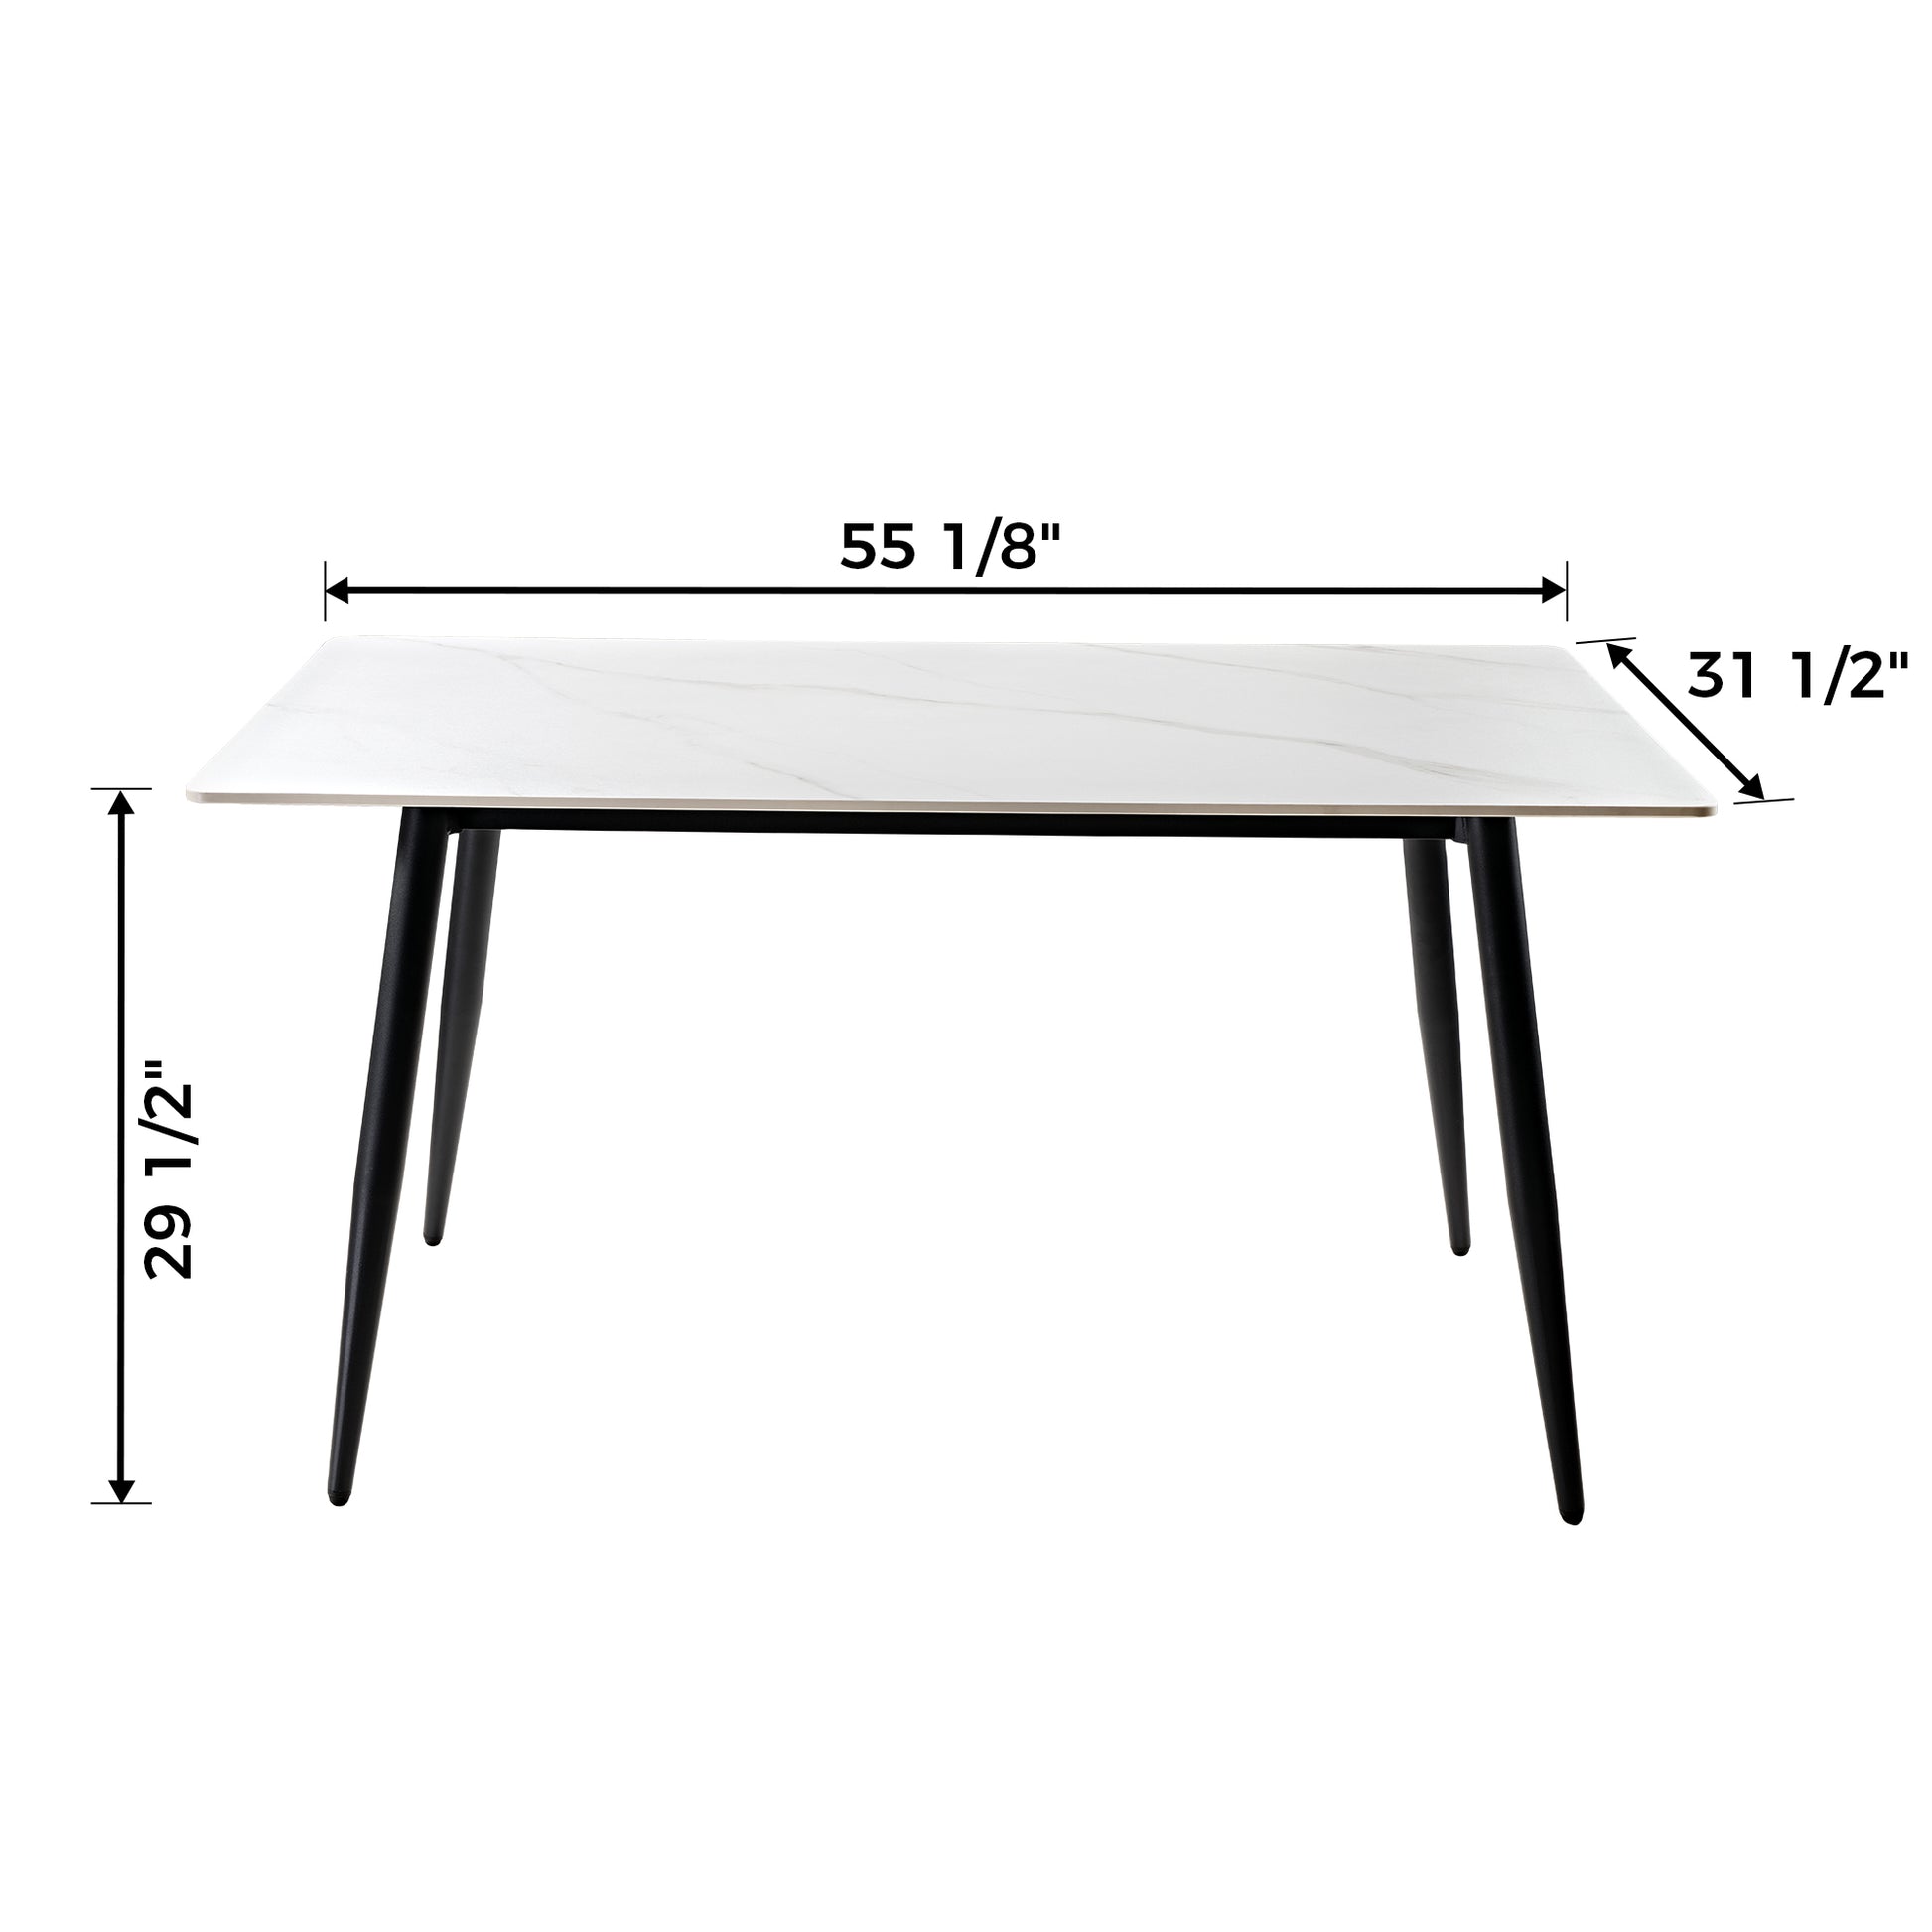 47'' White Rectangular Dining Table with Slate Desktop for Dining Room